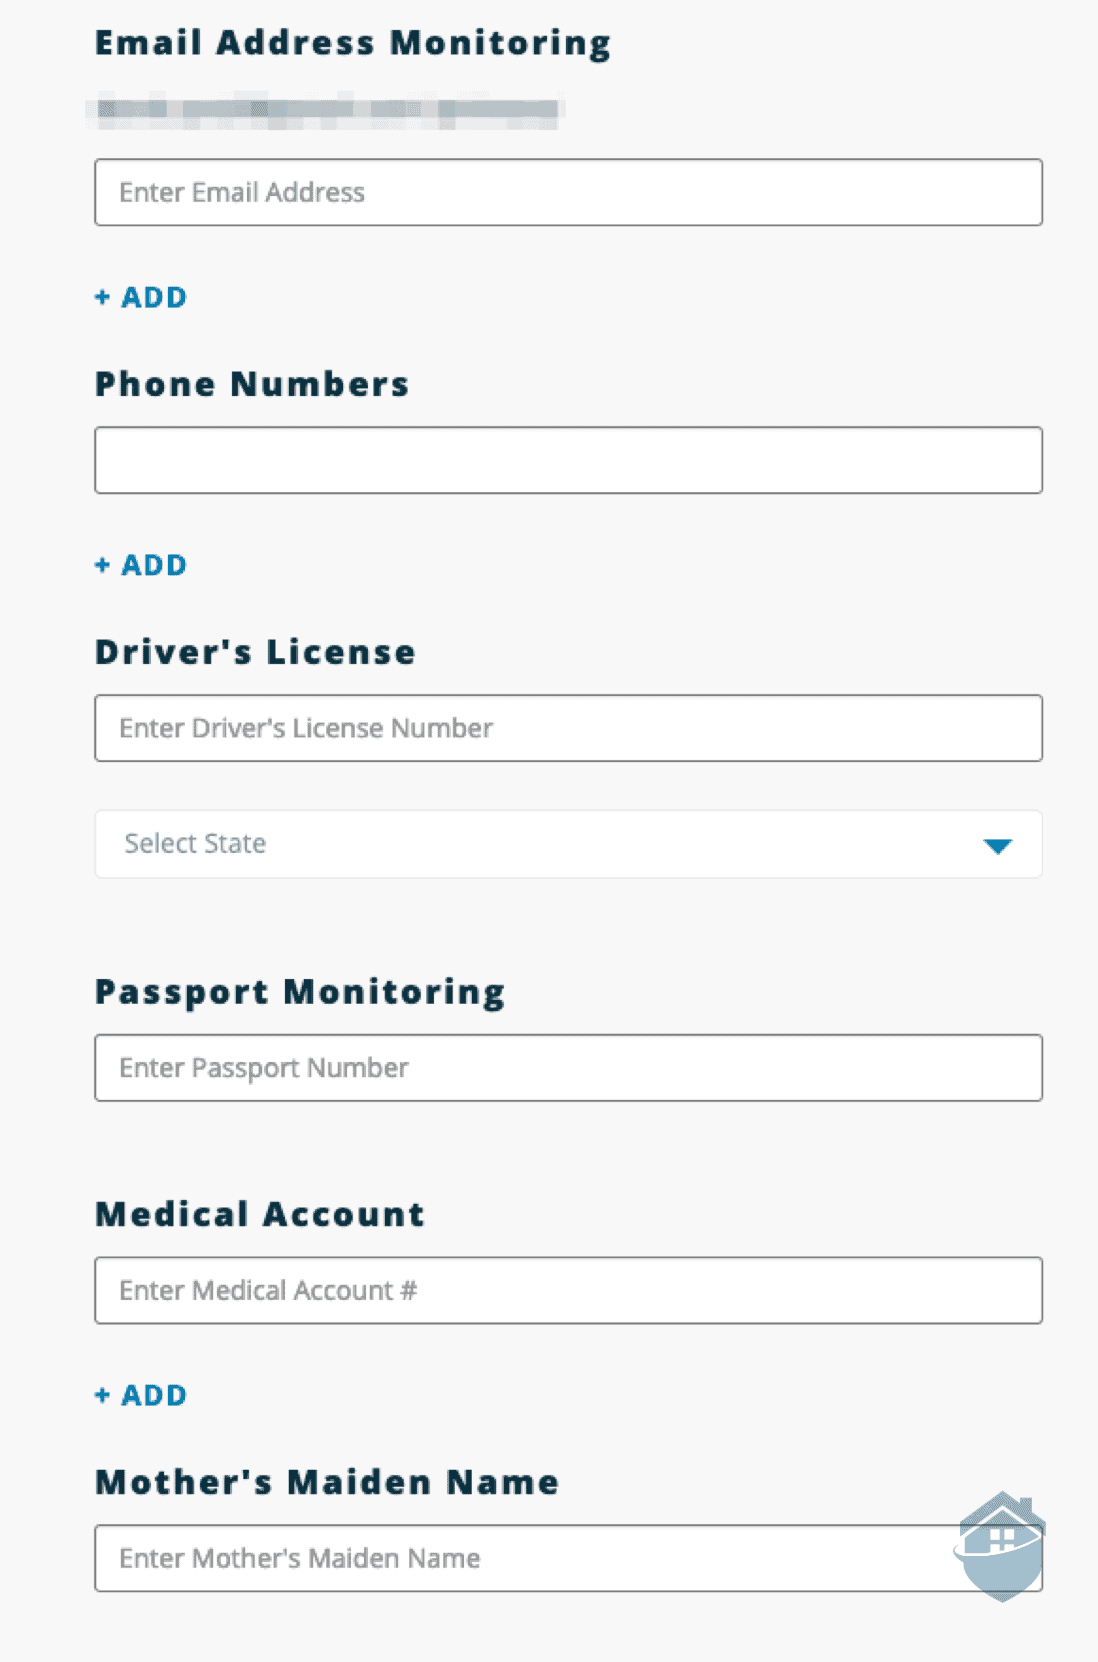 IdentityForce Account Monitoring